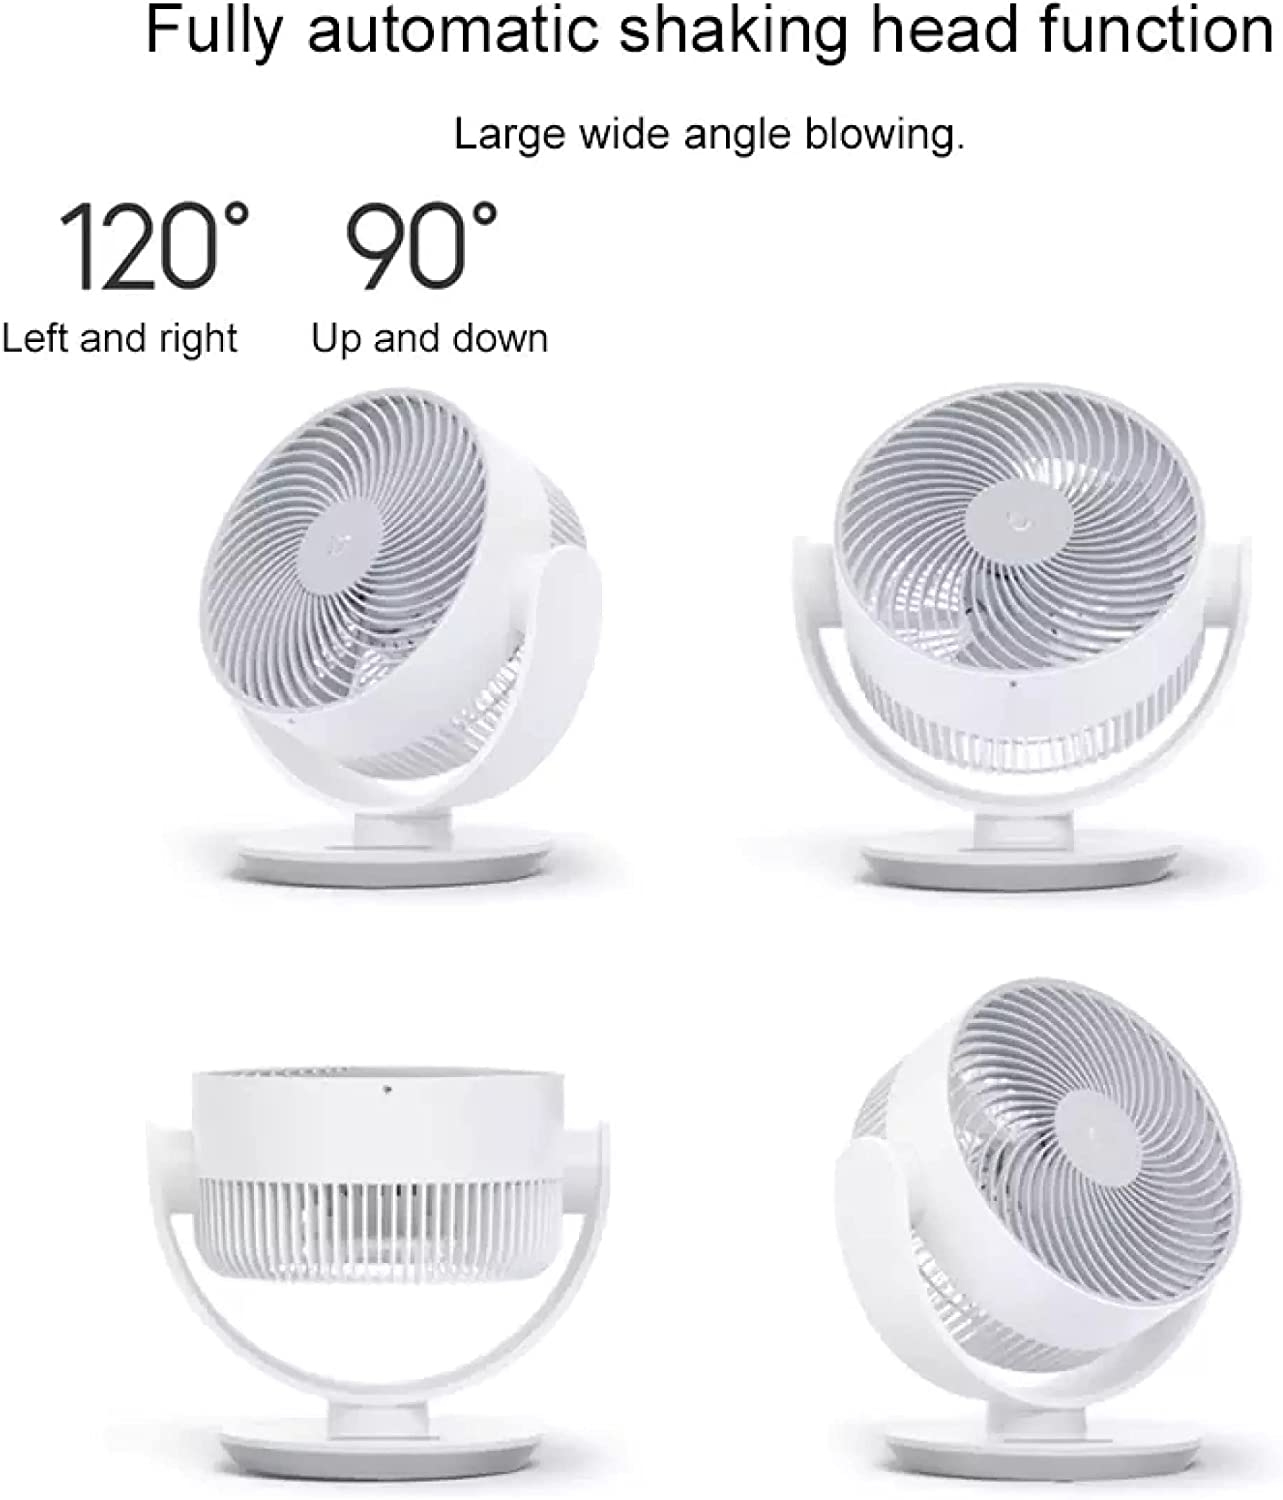 مروحة صغيرة للمكتب شاومي 5 سرعات 24 واط Xiaomi Mijia Smart Fan DC Household Circulation Fan